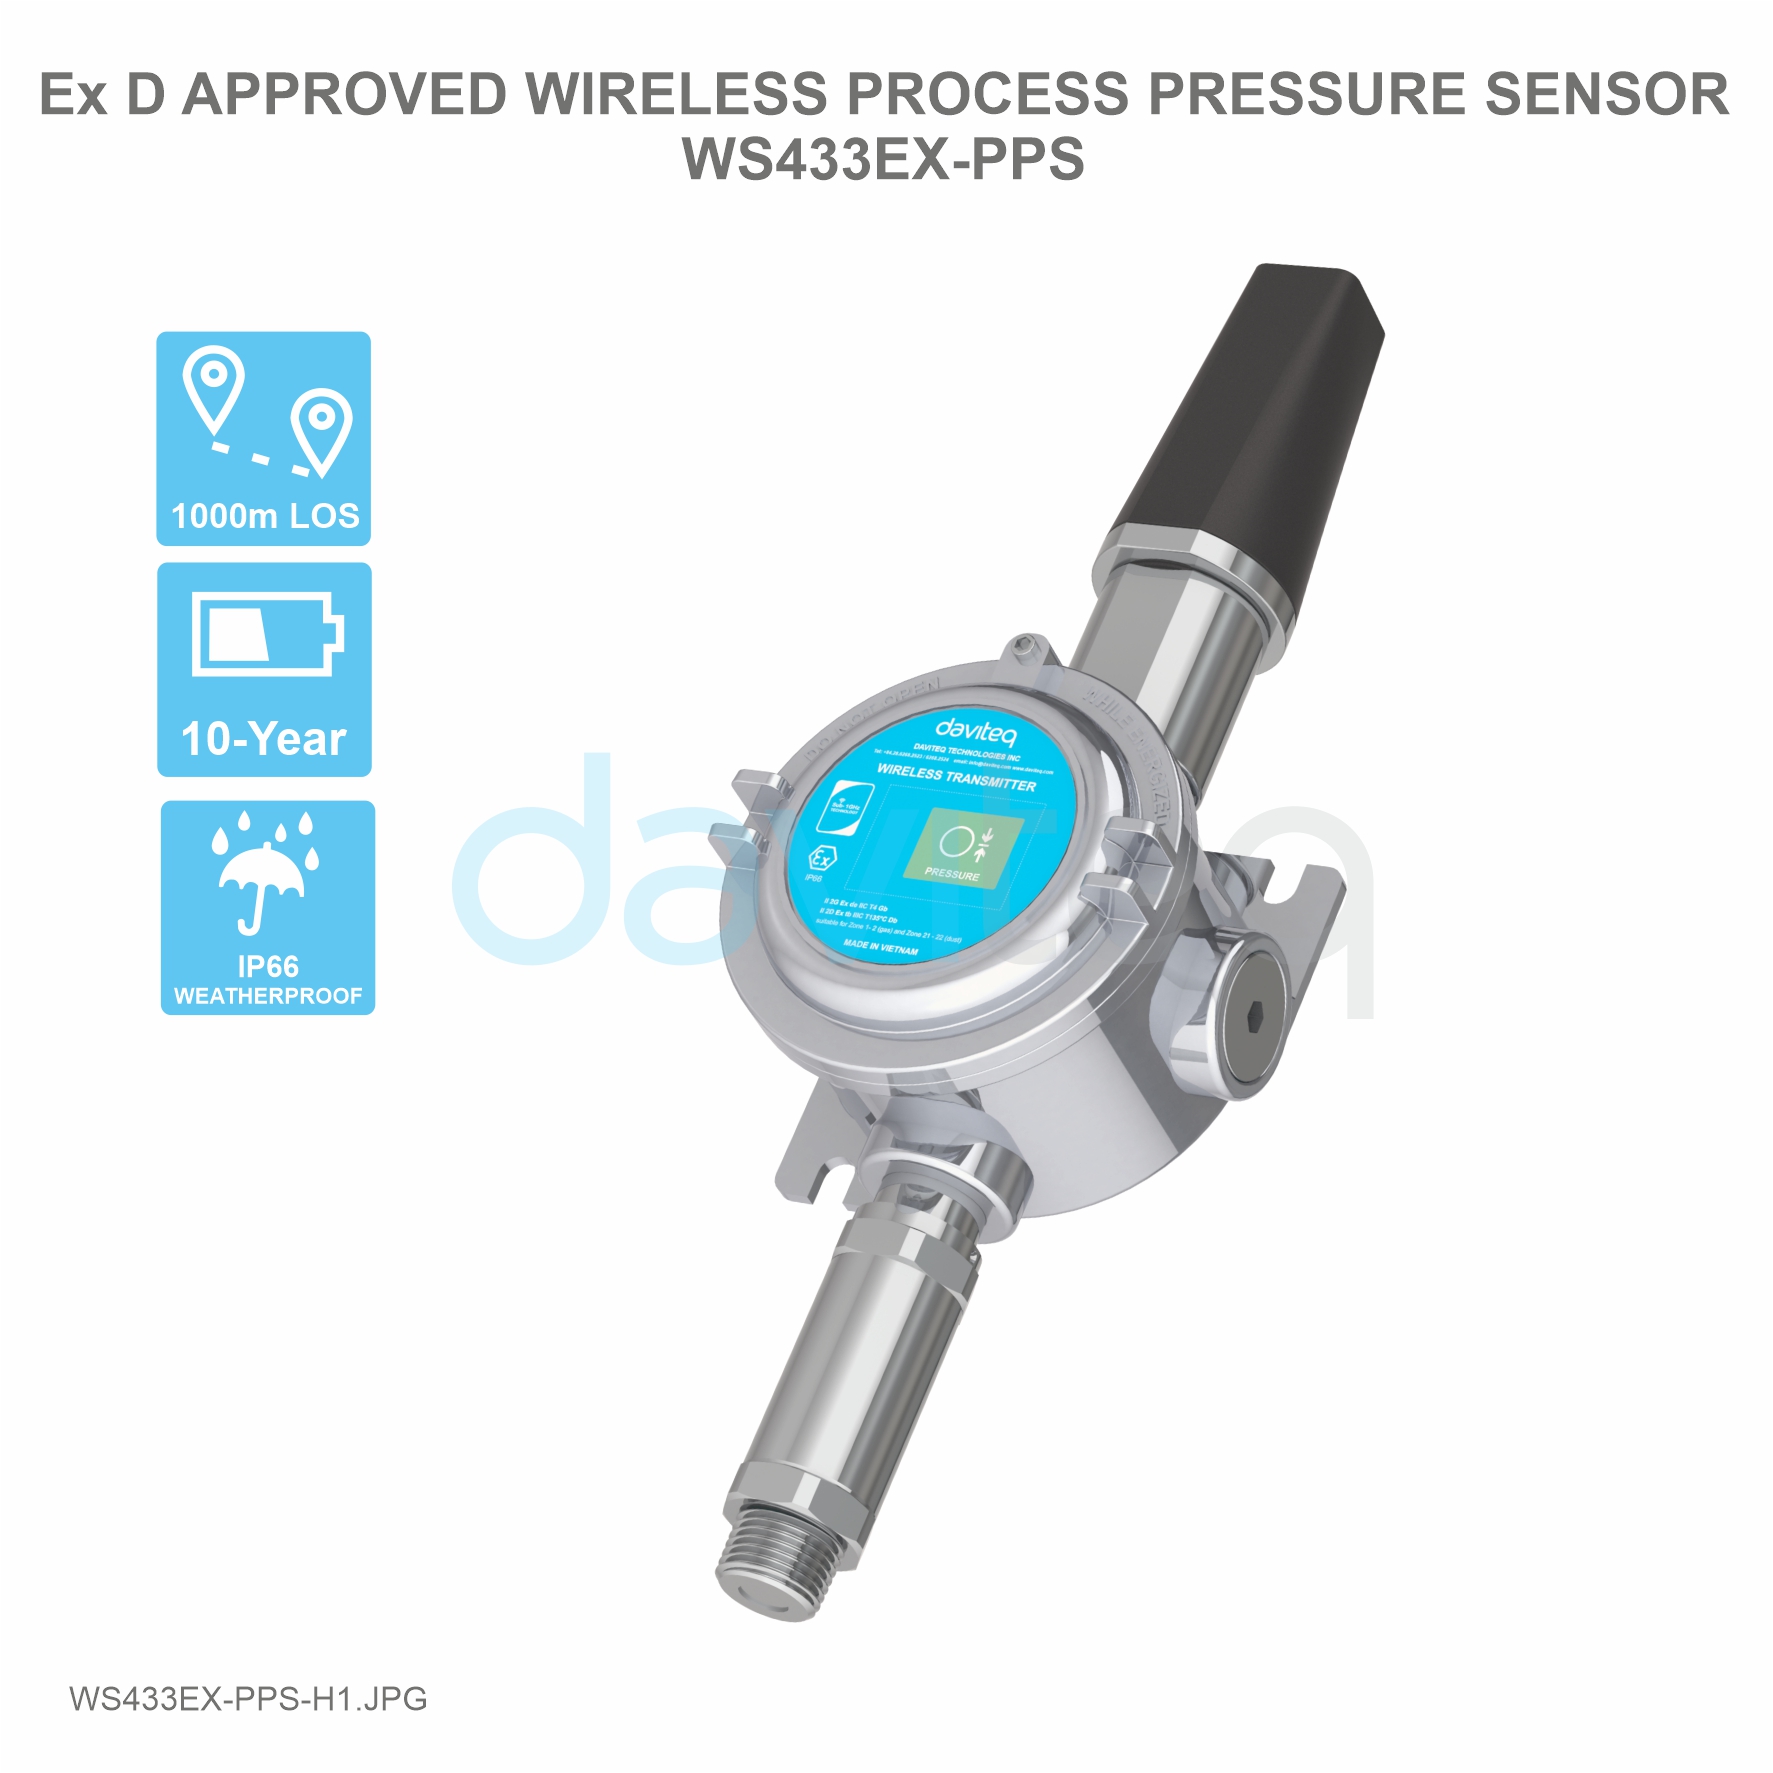 Ex d Approved Sub-GHz Process Pressure Sensor